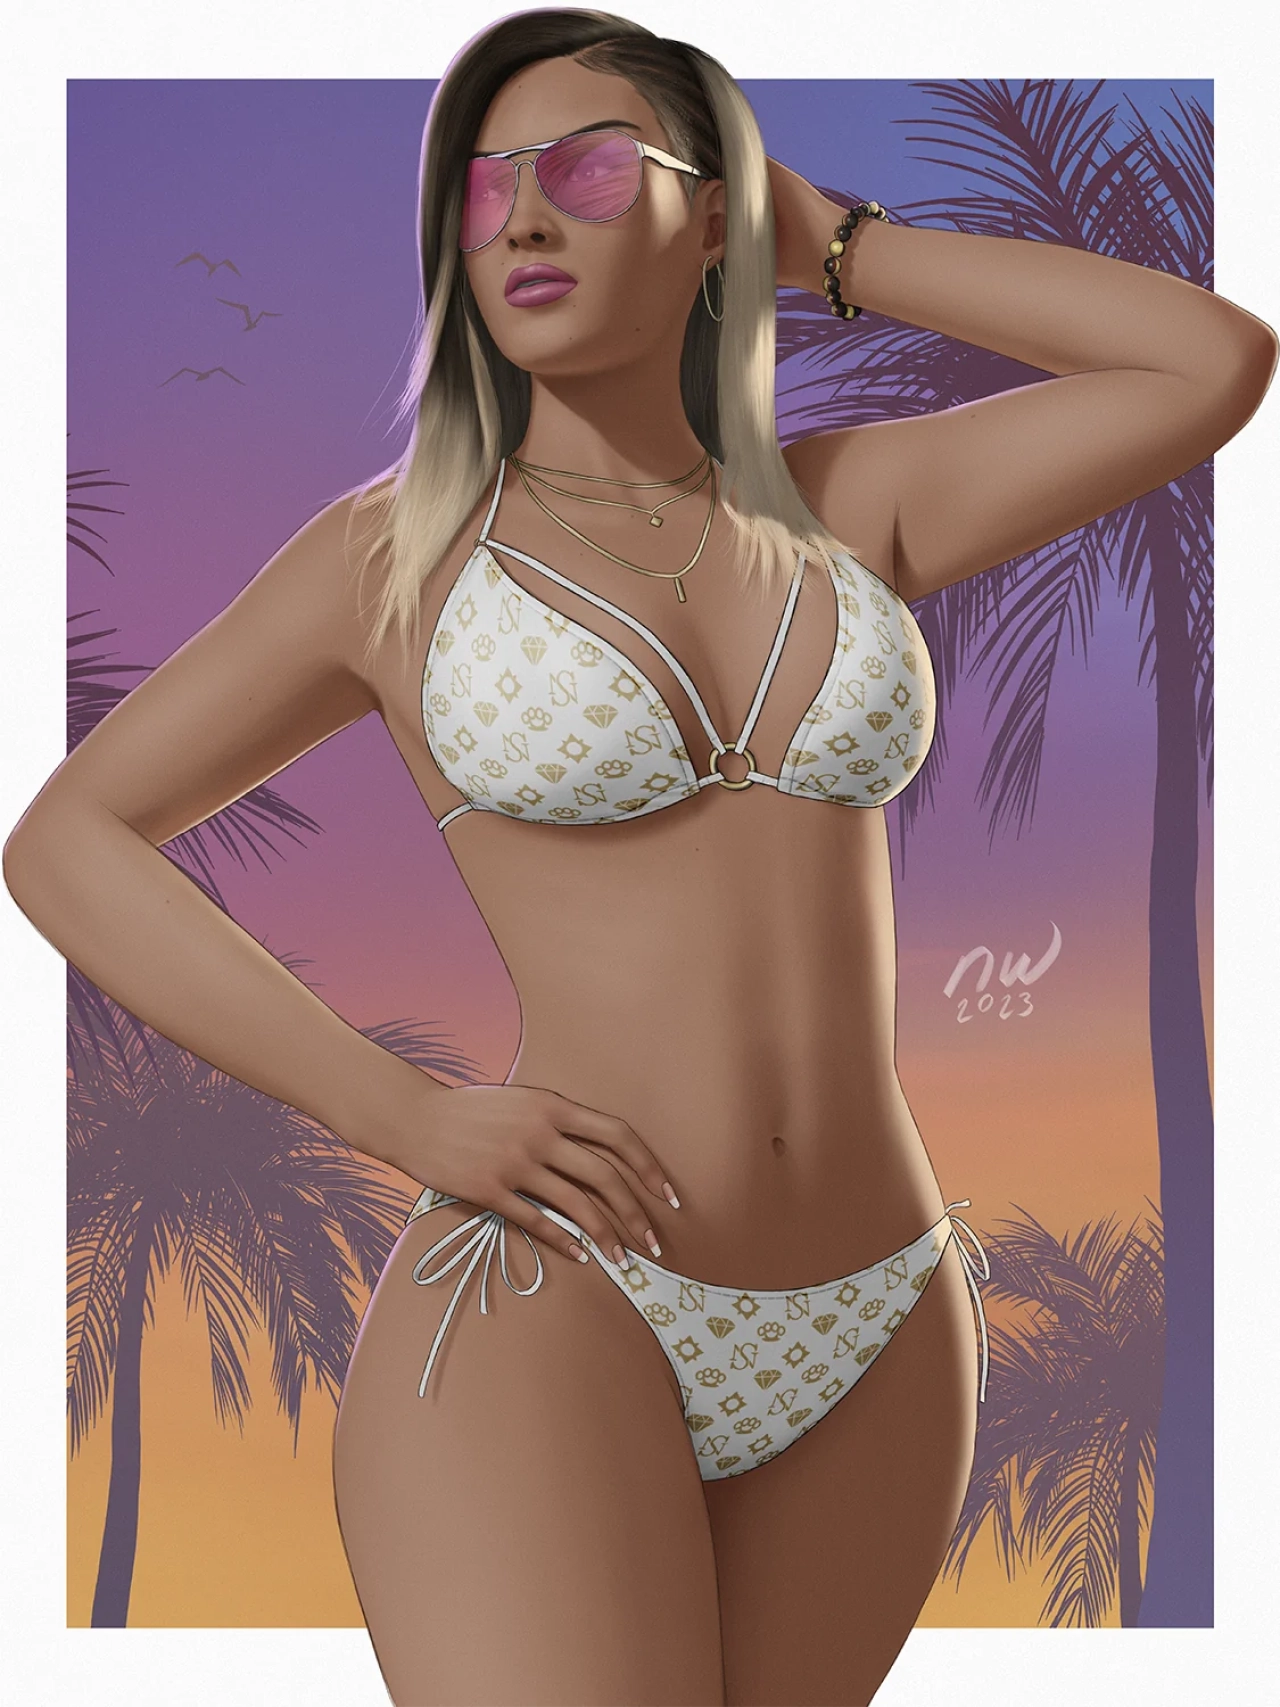 Lucia In A Sessanta Nove Bikini With Sunglasses By NastyWiNN3R